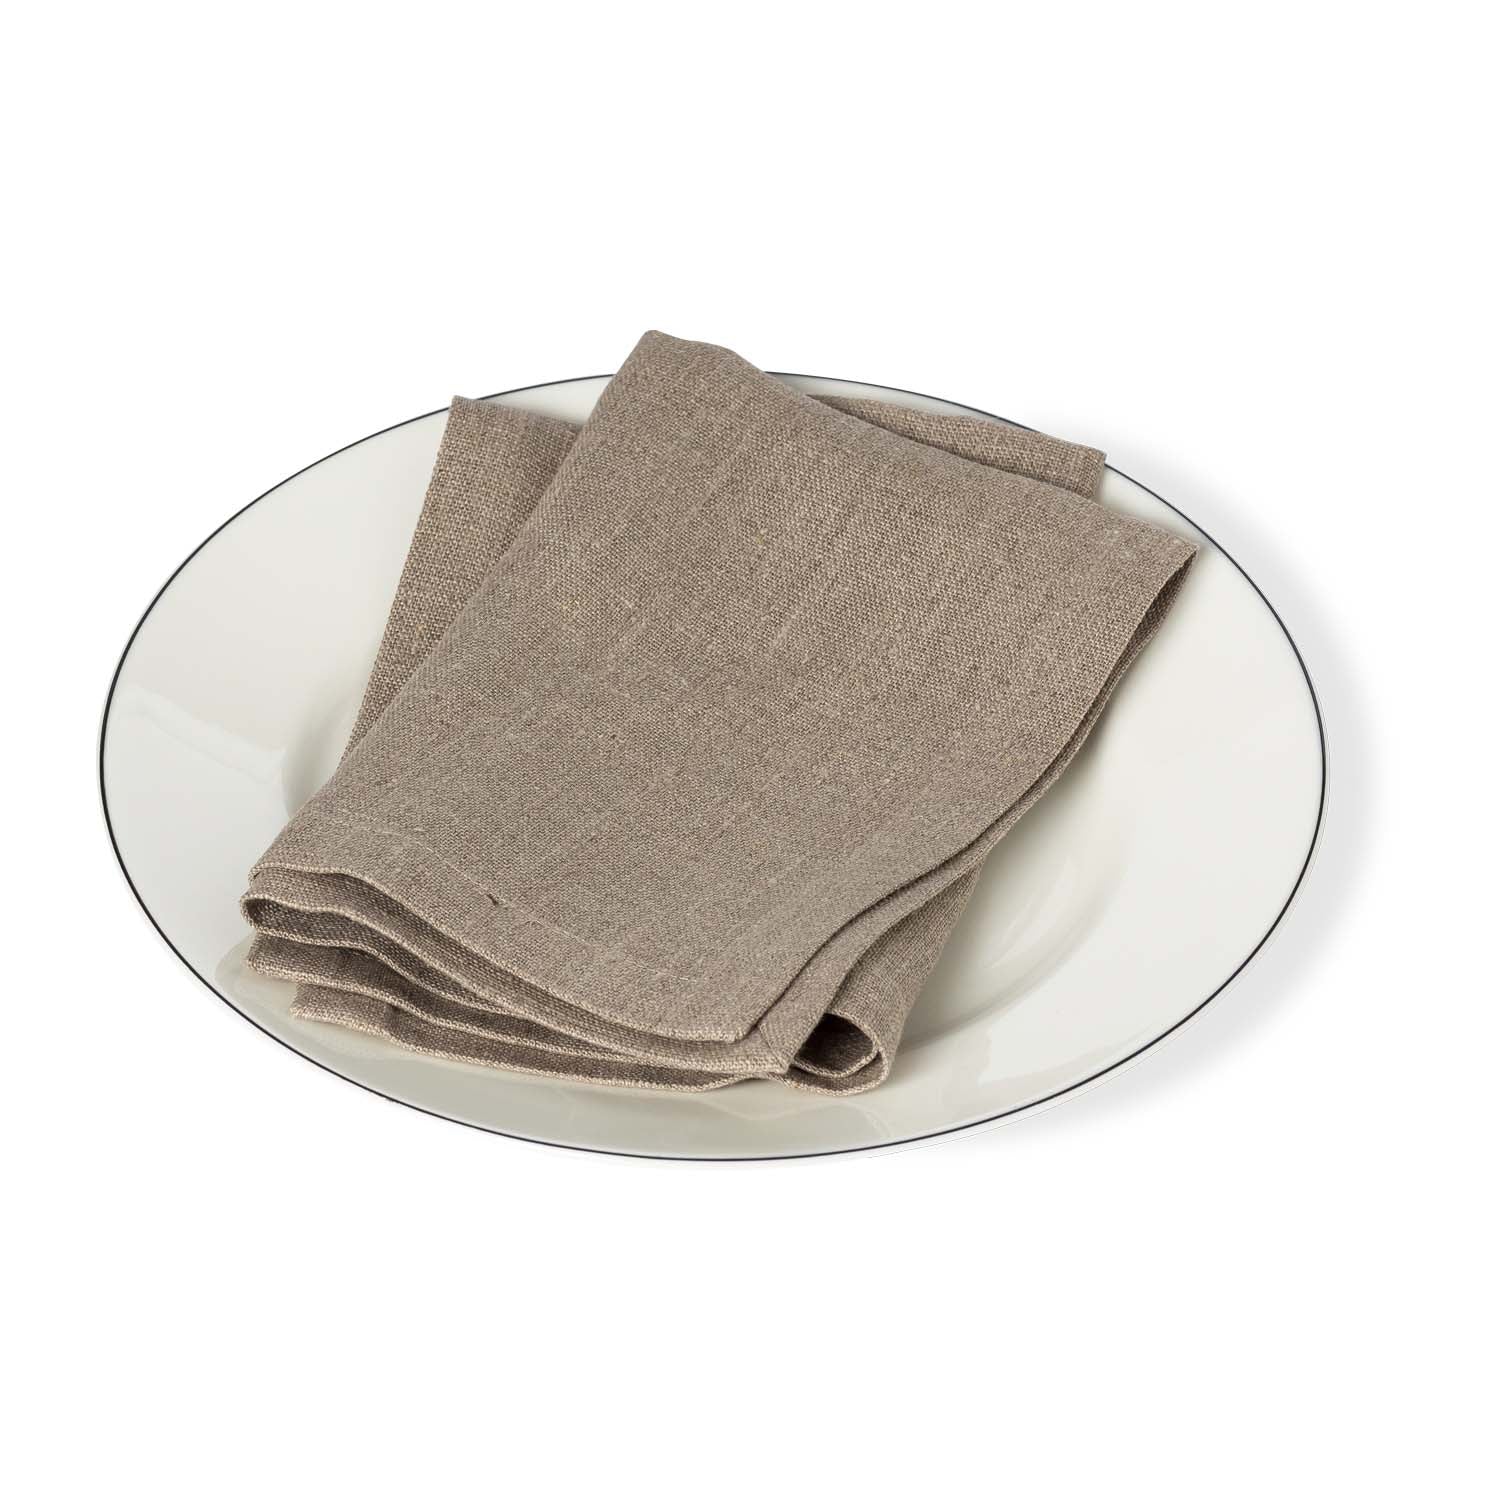 Wholesale Natural Linen Table Napkins - Buy Wholesale Natural